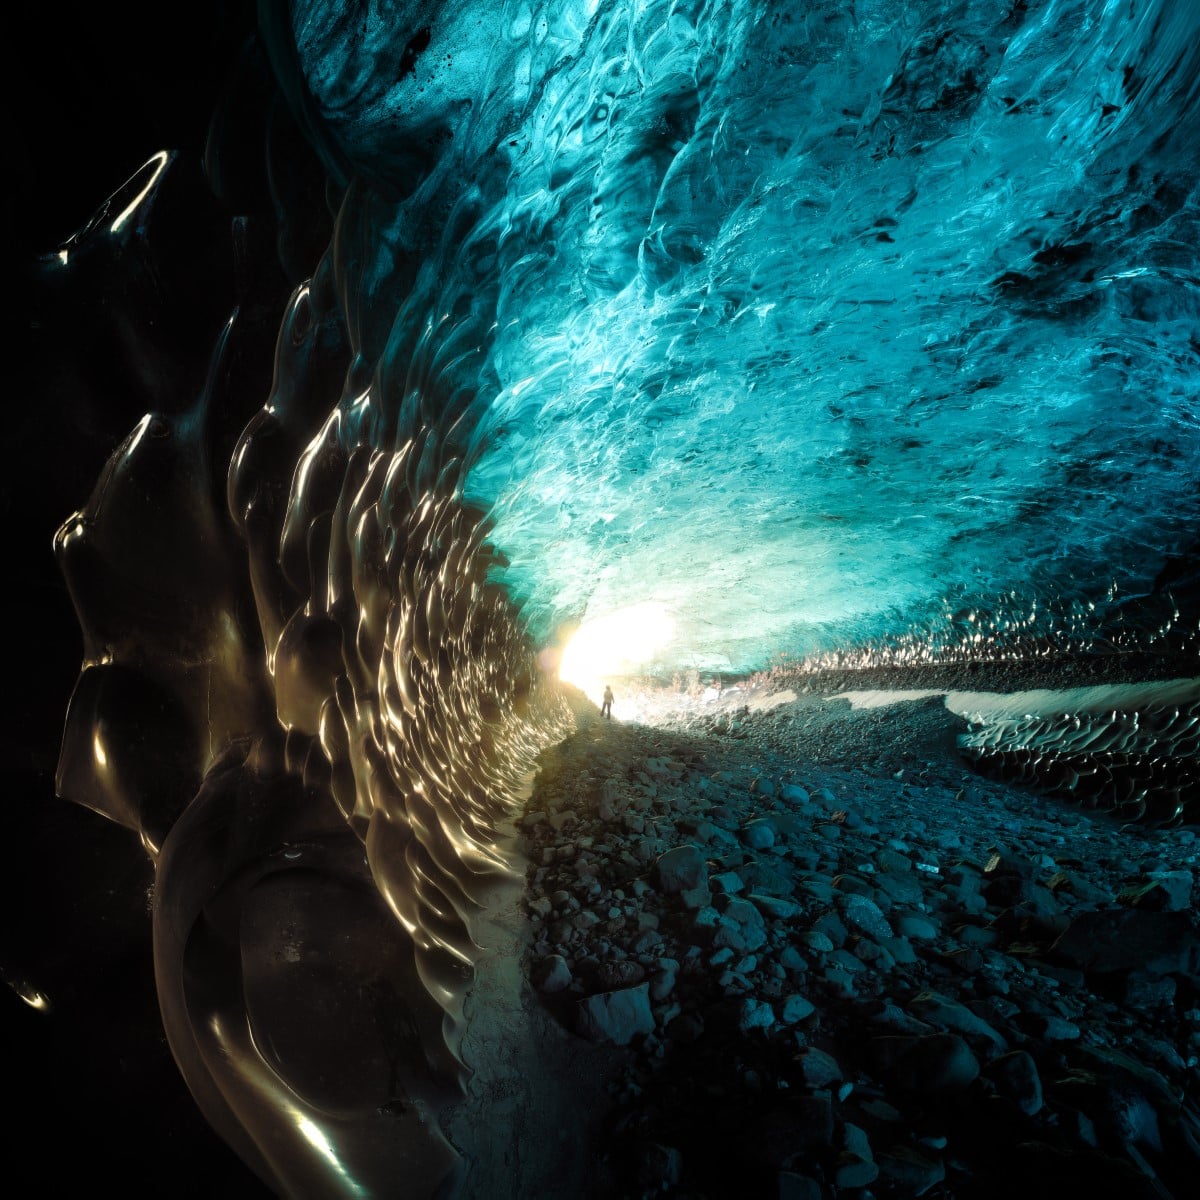 Iceland Ice Caves by Ryan Newburn